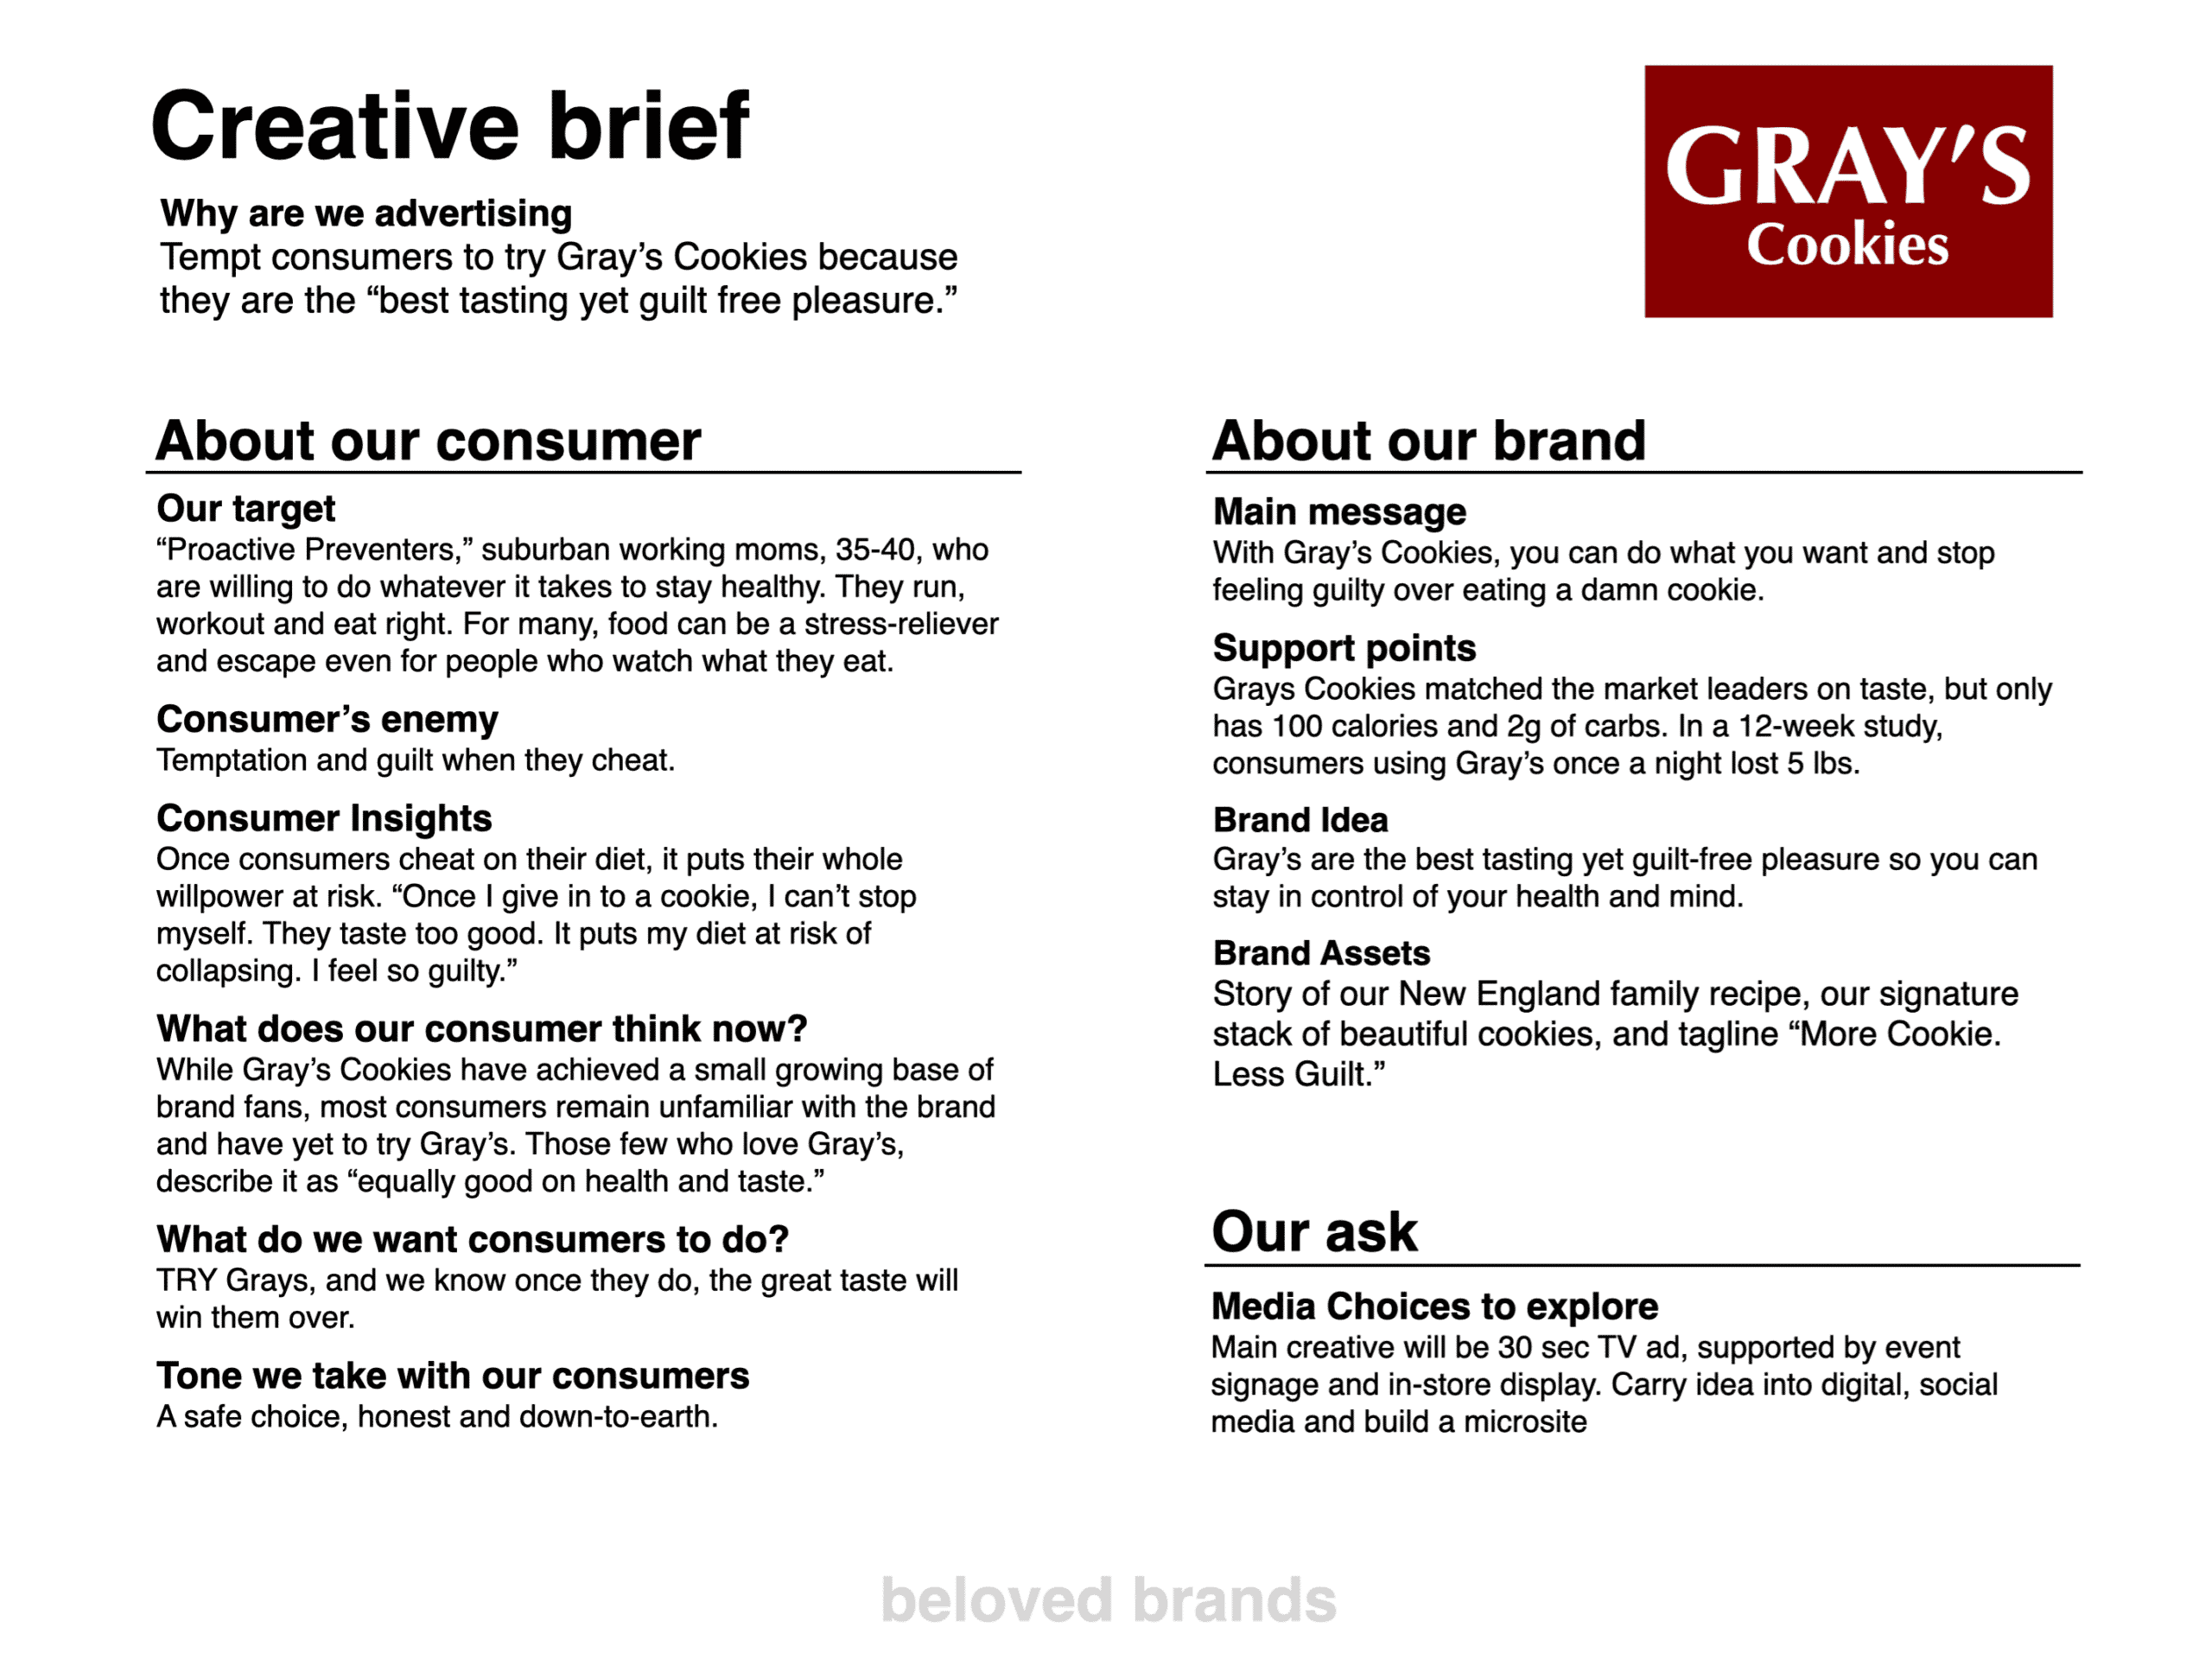 Creative Brief template